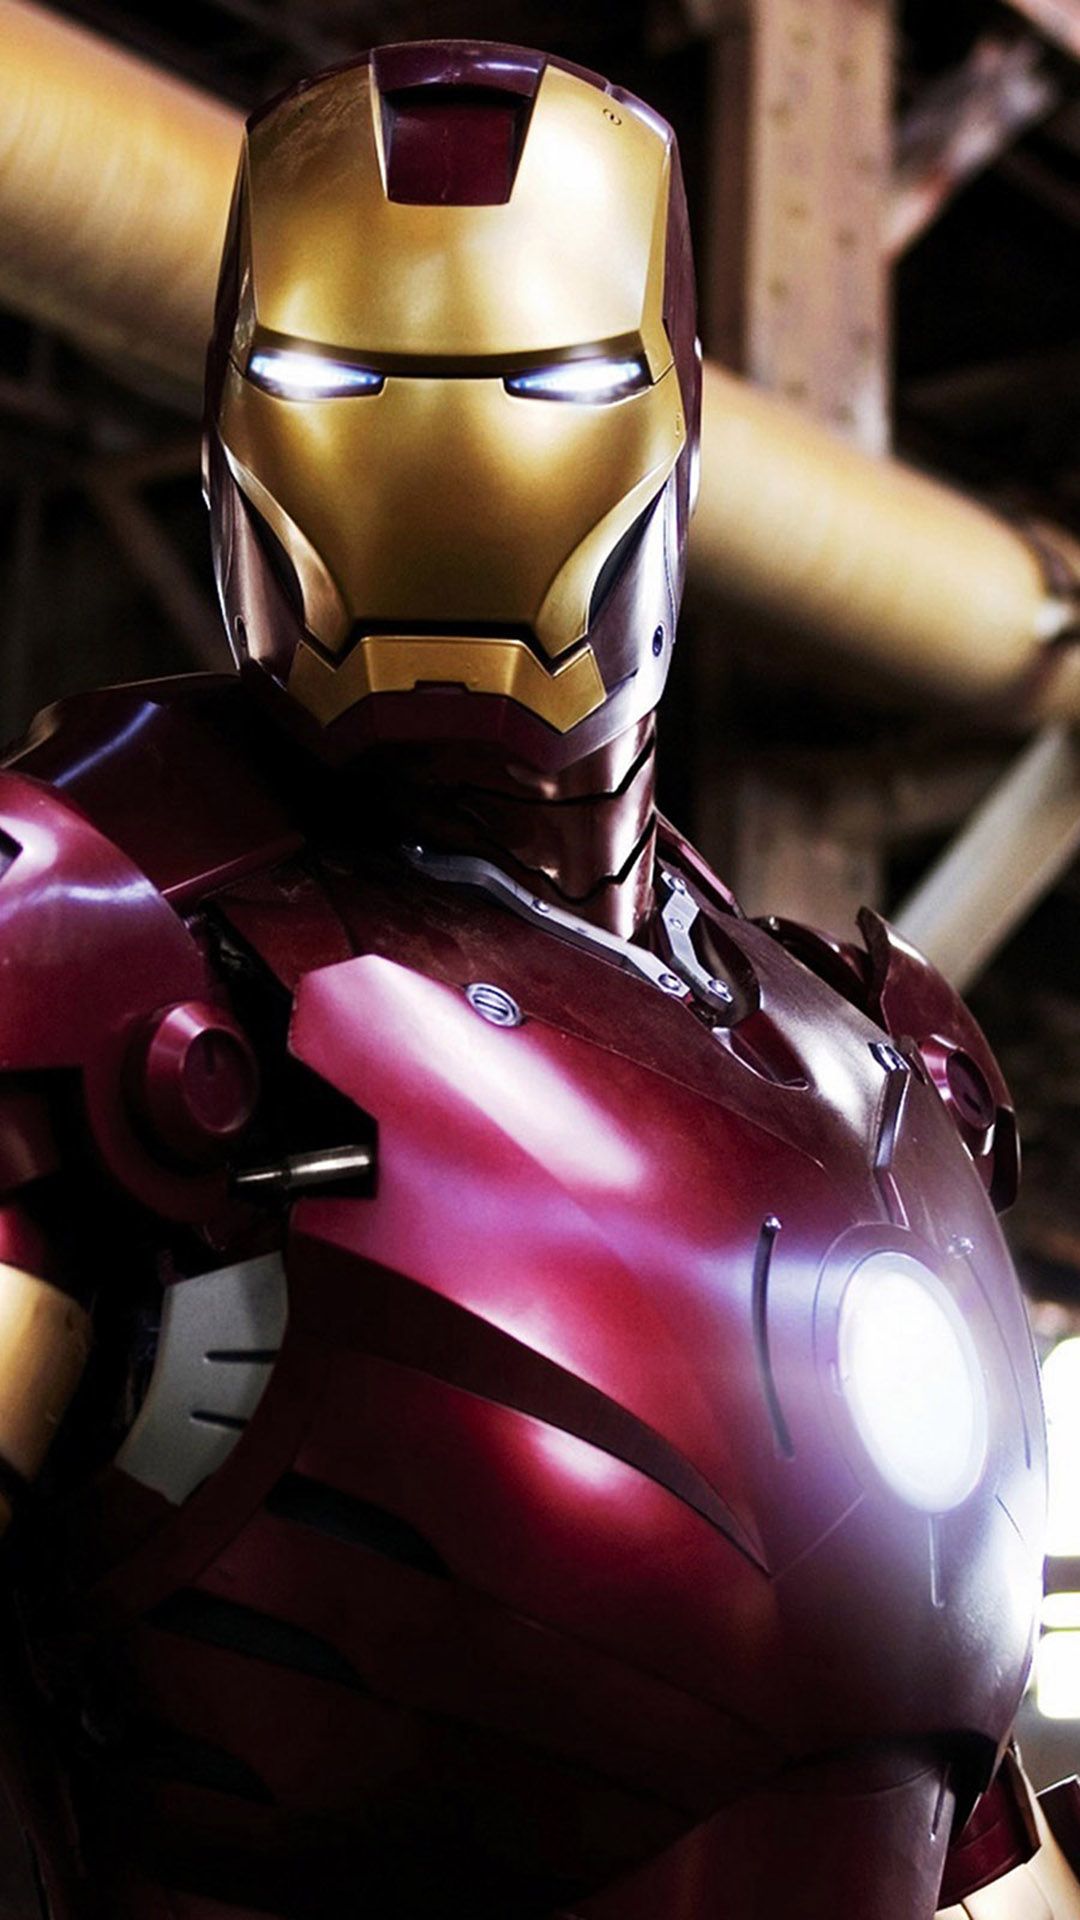 HD Background Ironman Movie Still Mask Armor Tony Stark Wallpaper